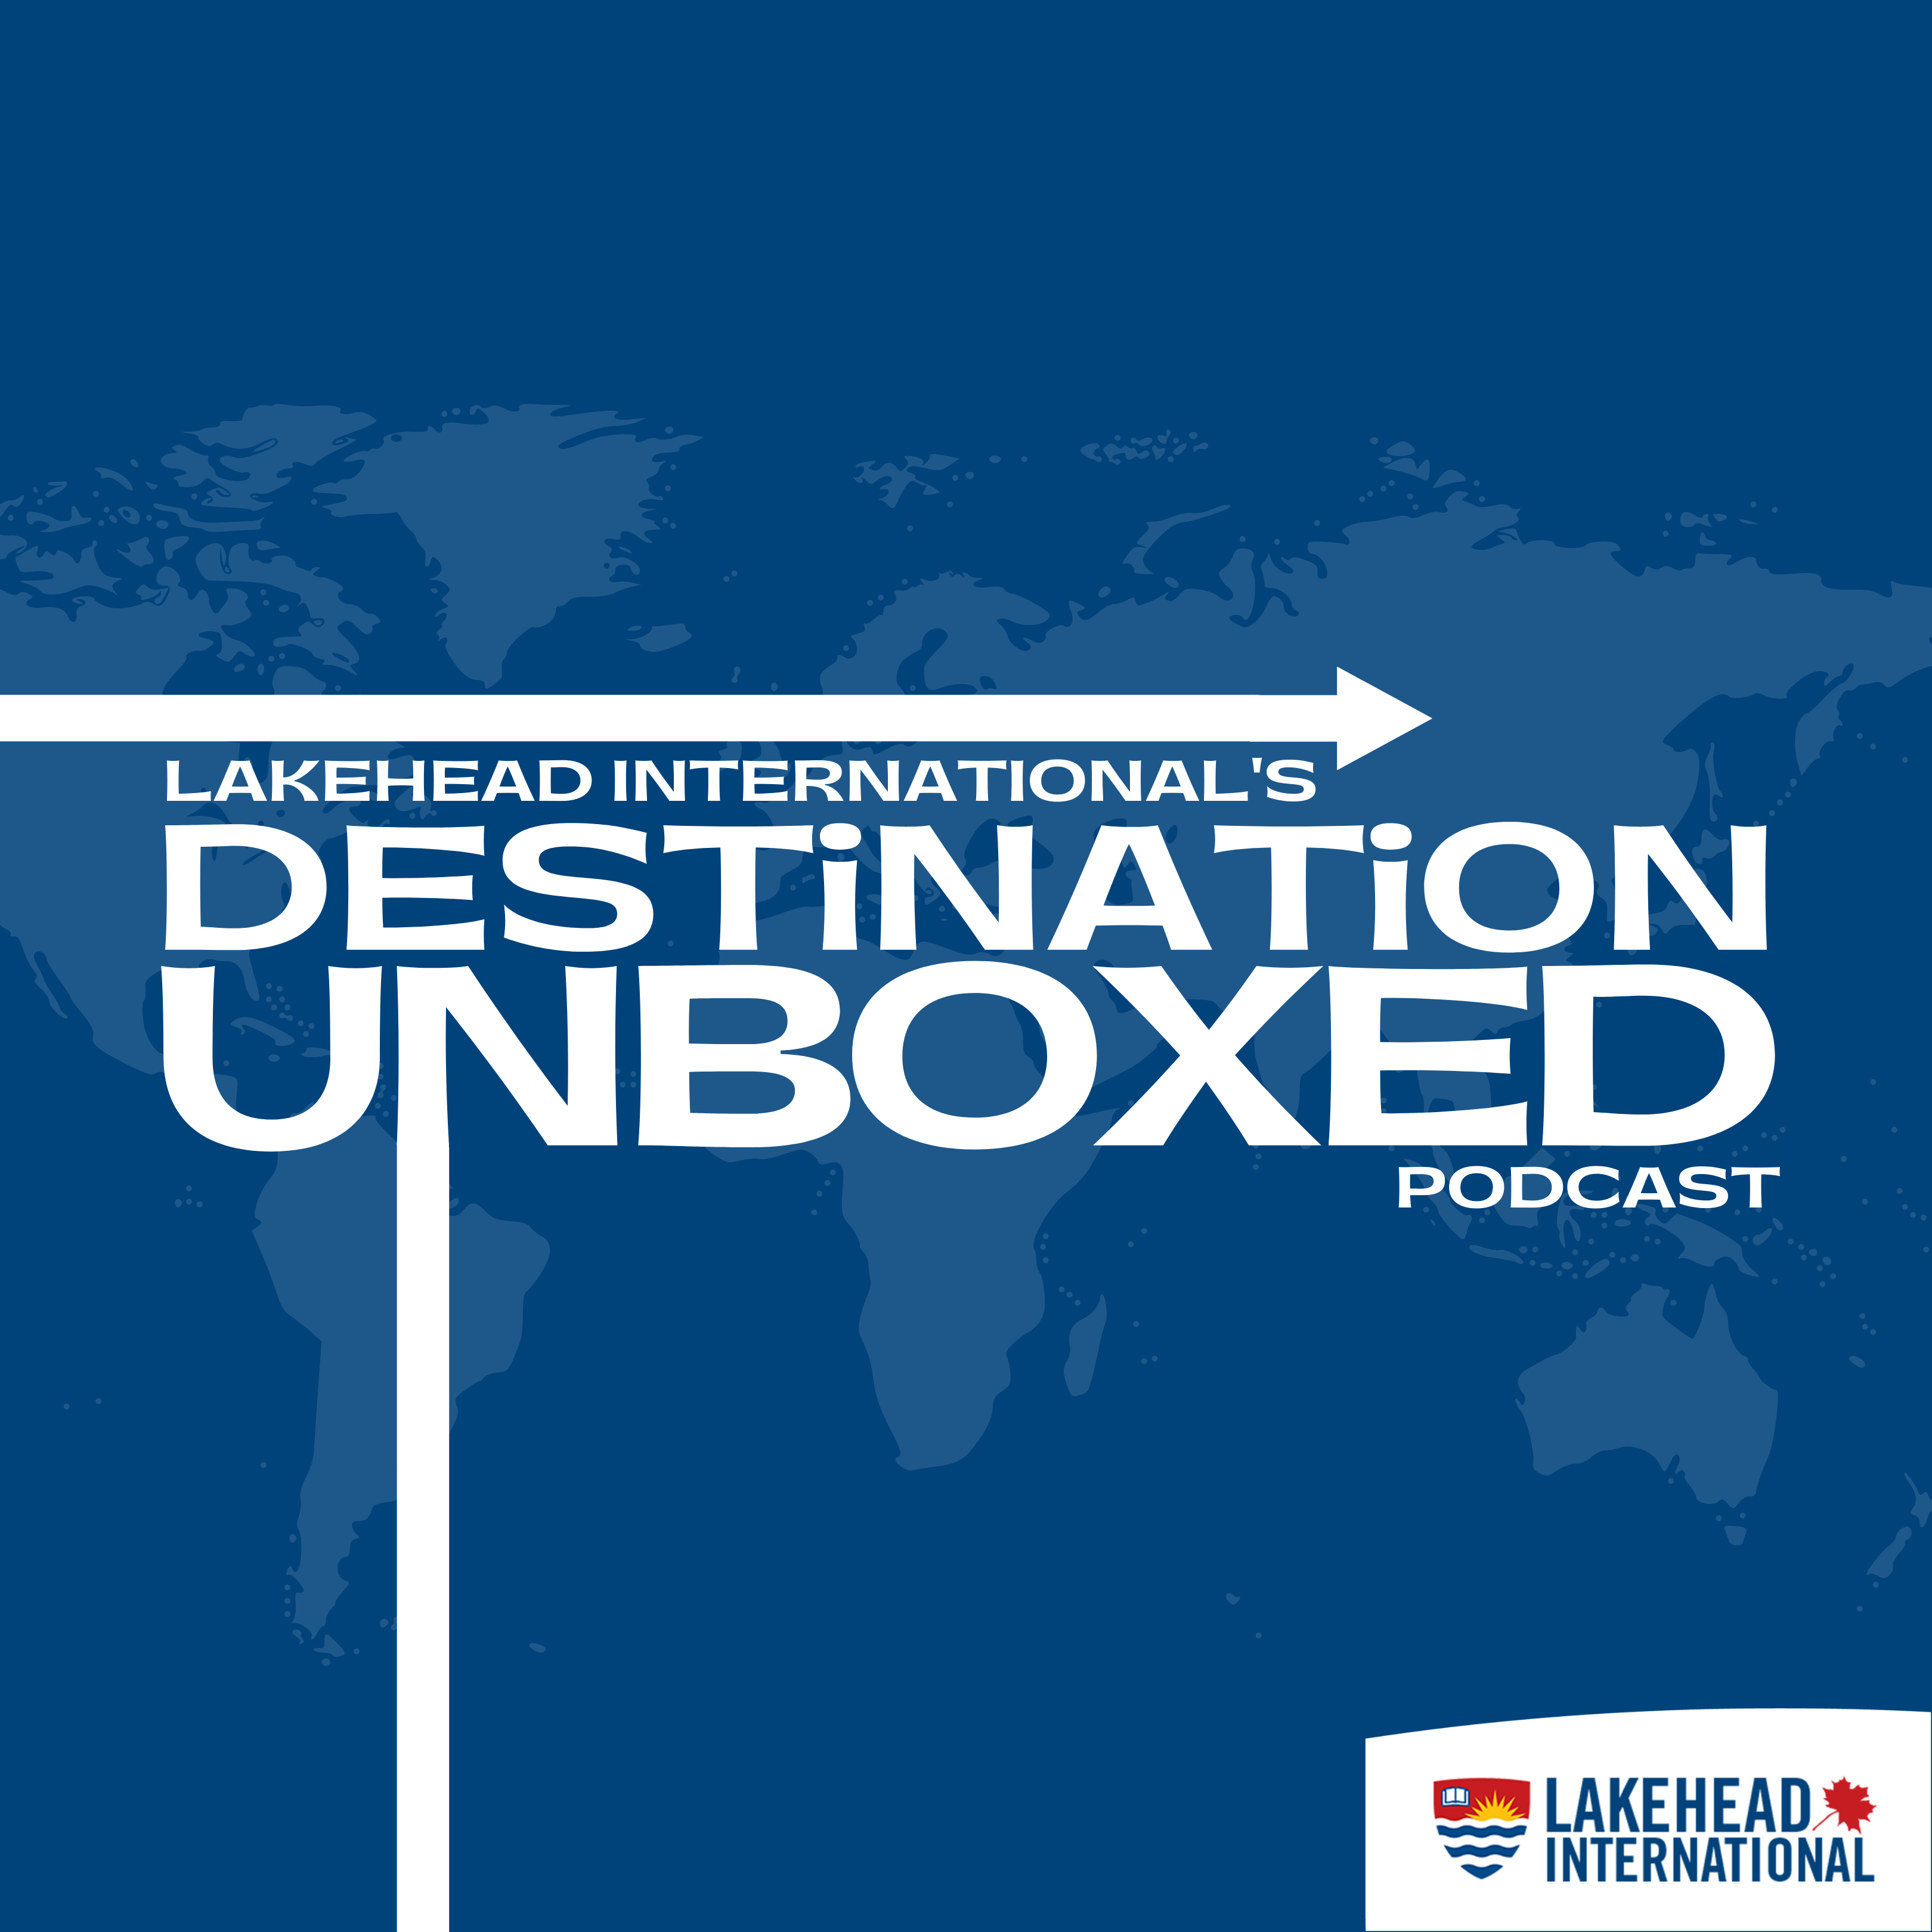 Lakehead International's Destination Unboxed Podcast